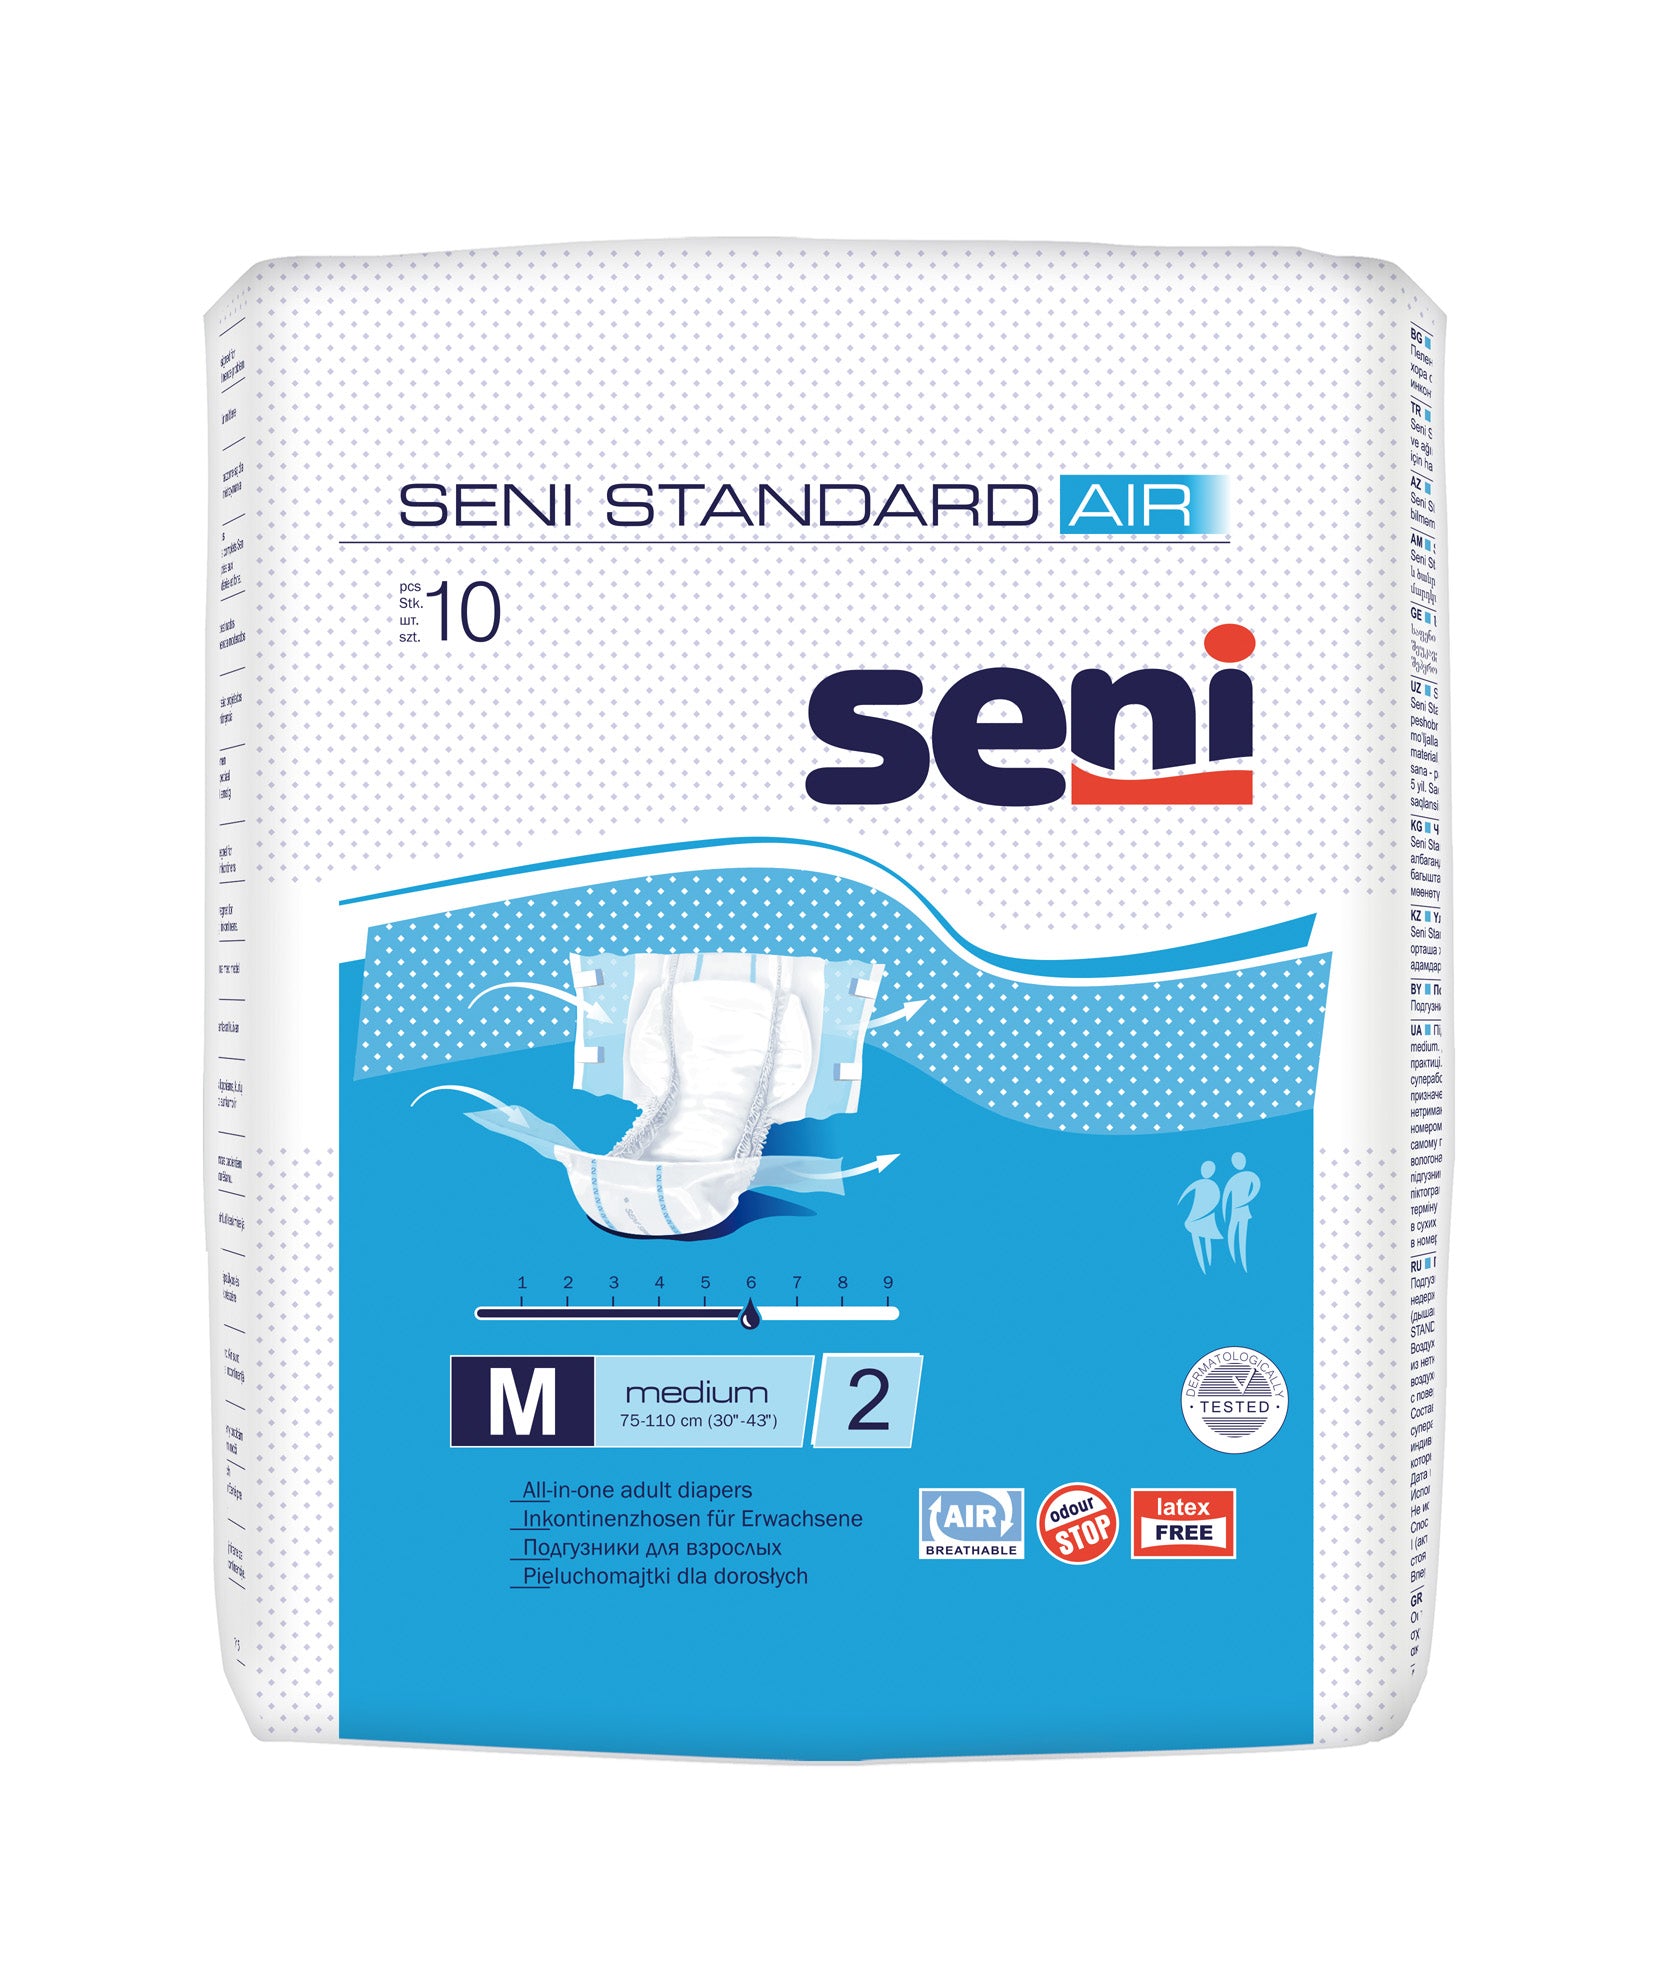 Seni Standard Air Medium 10's